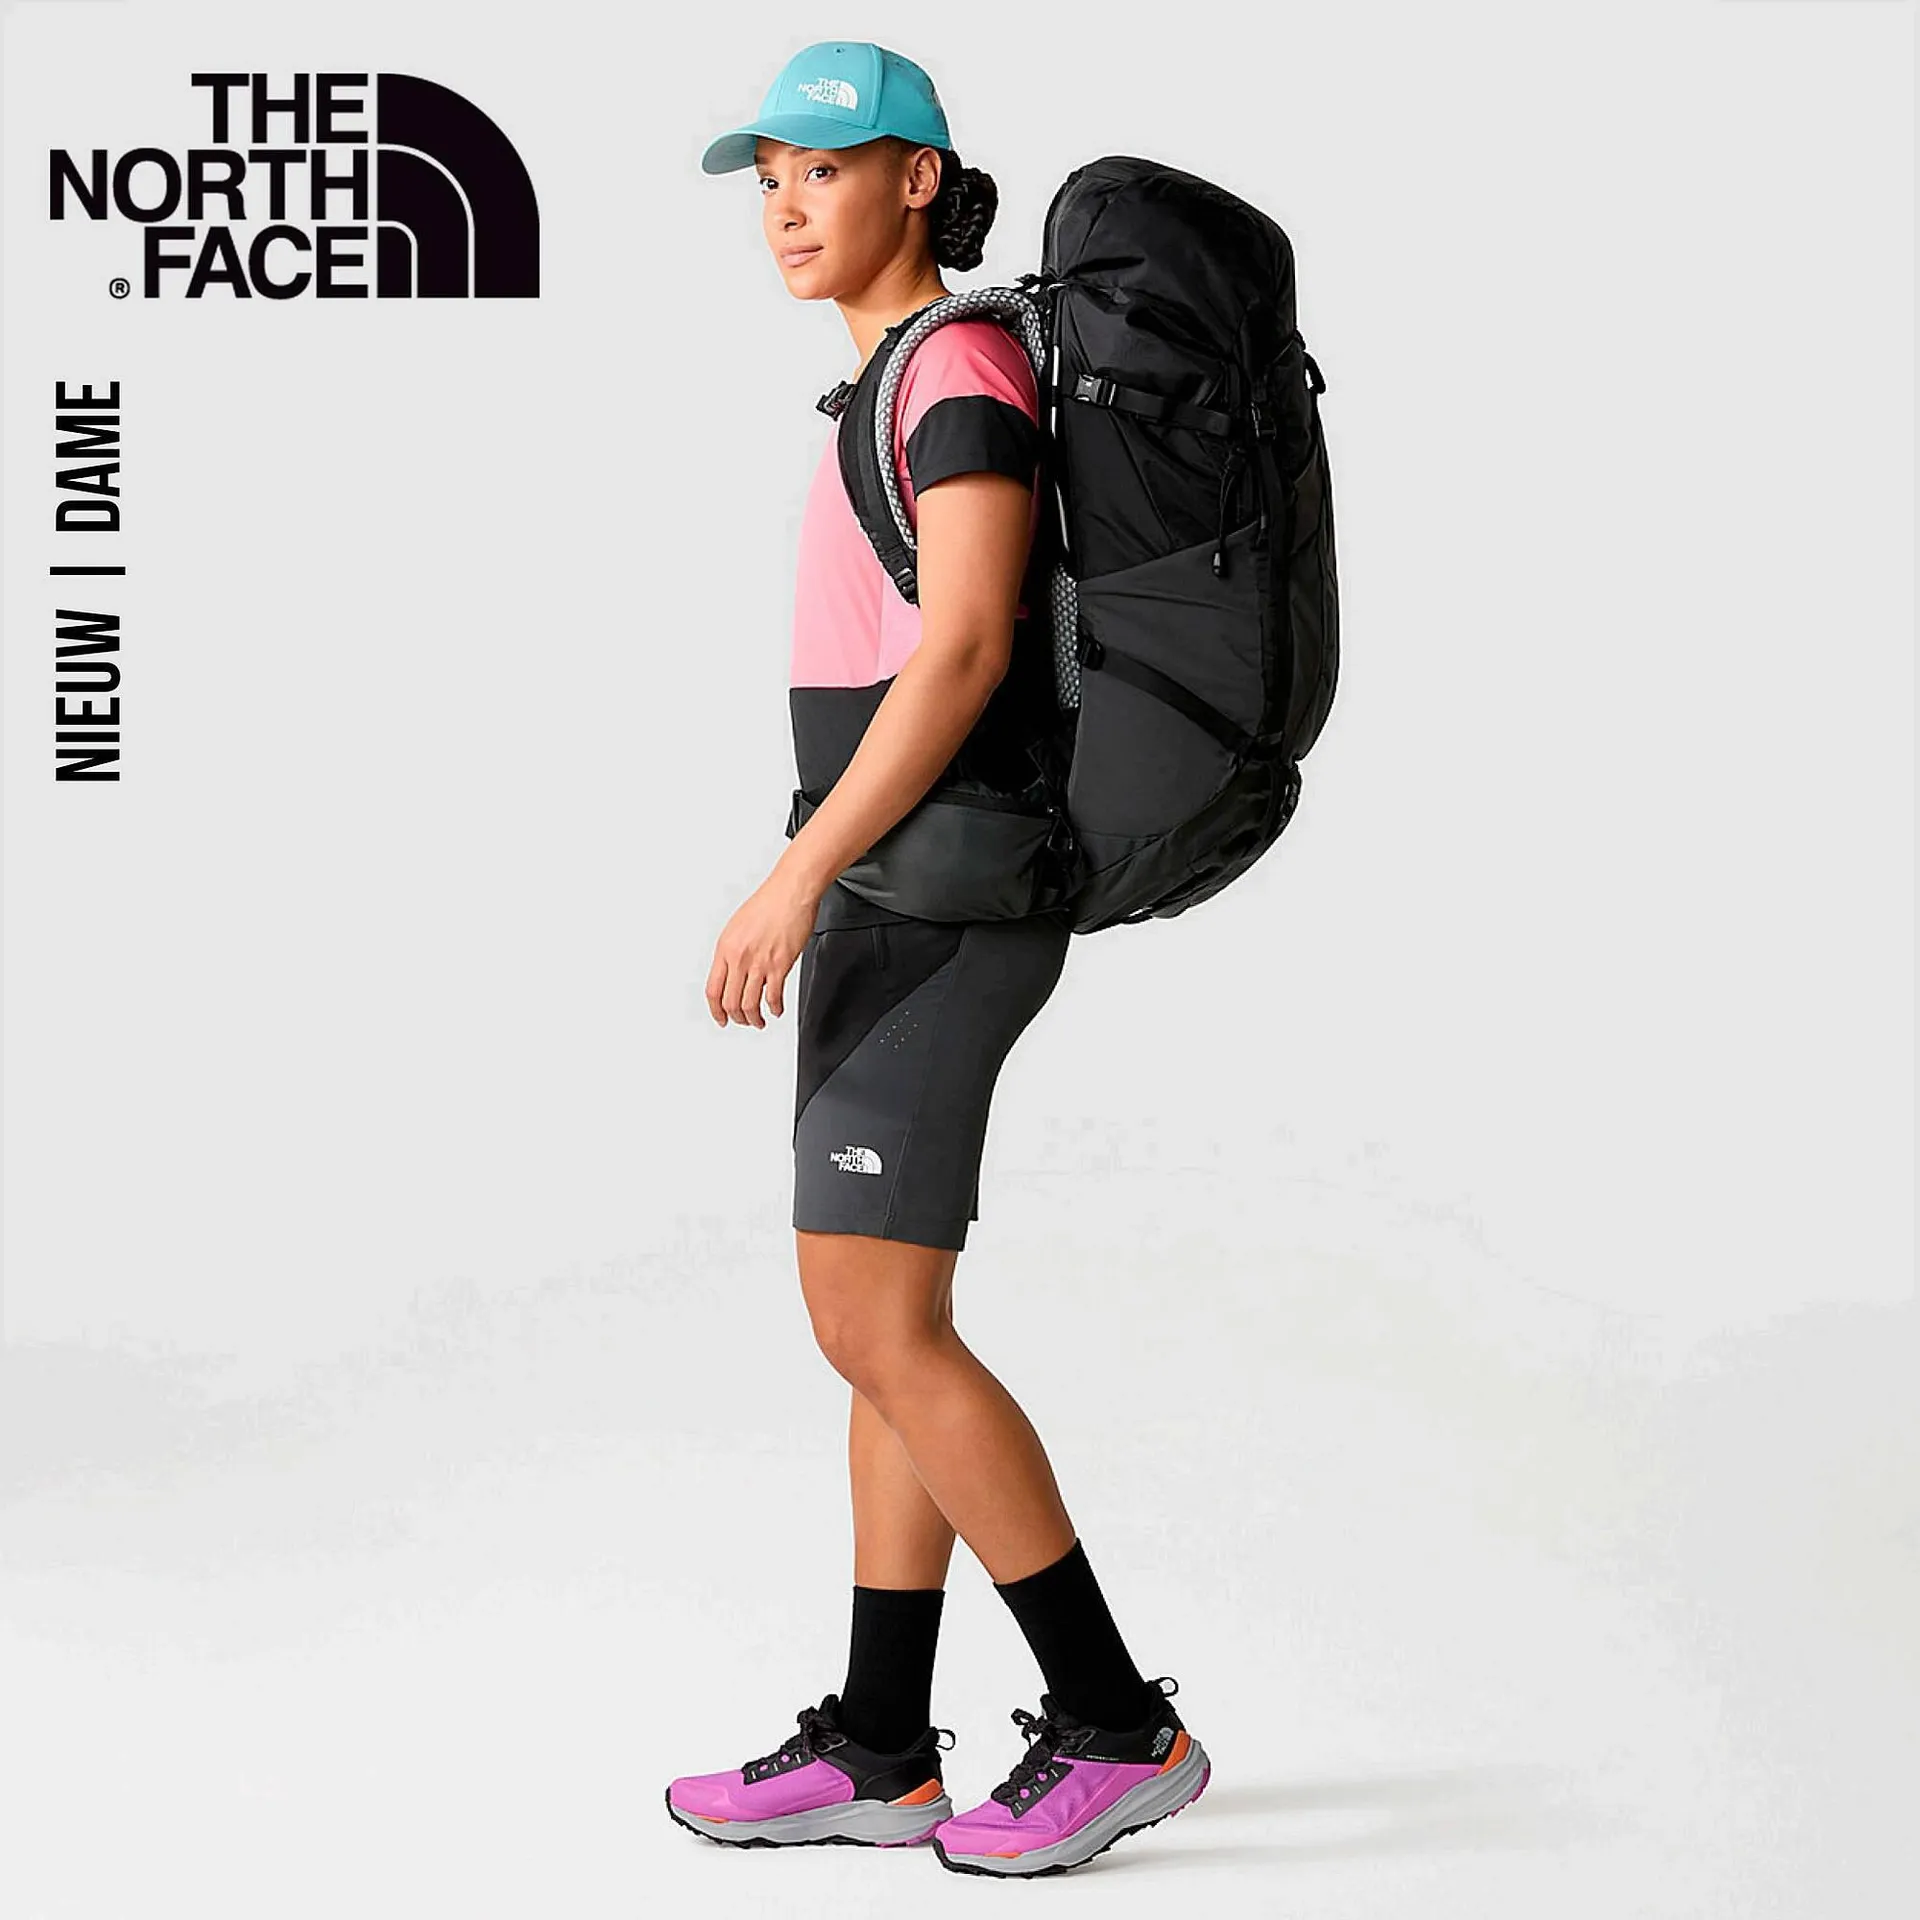 The North Face folder - 1